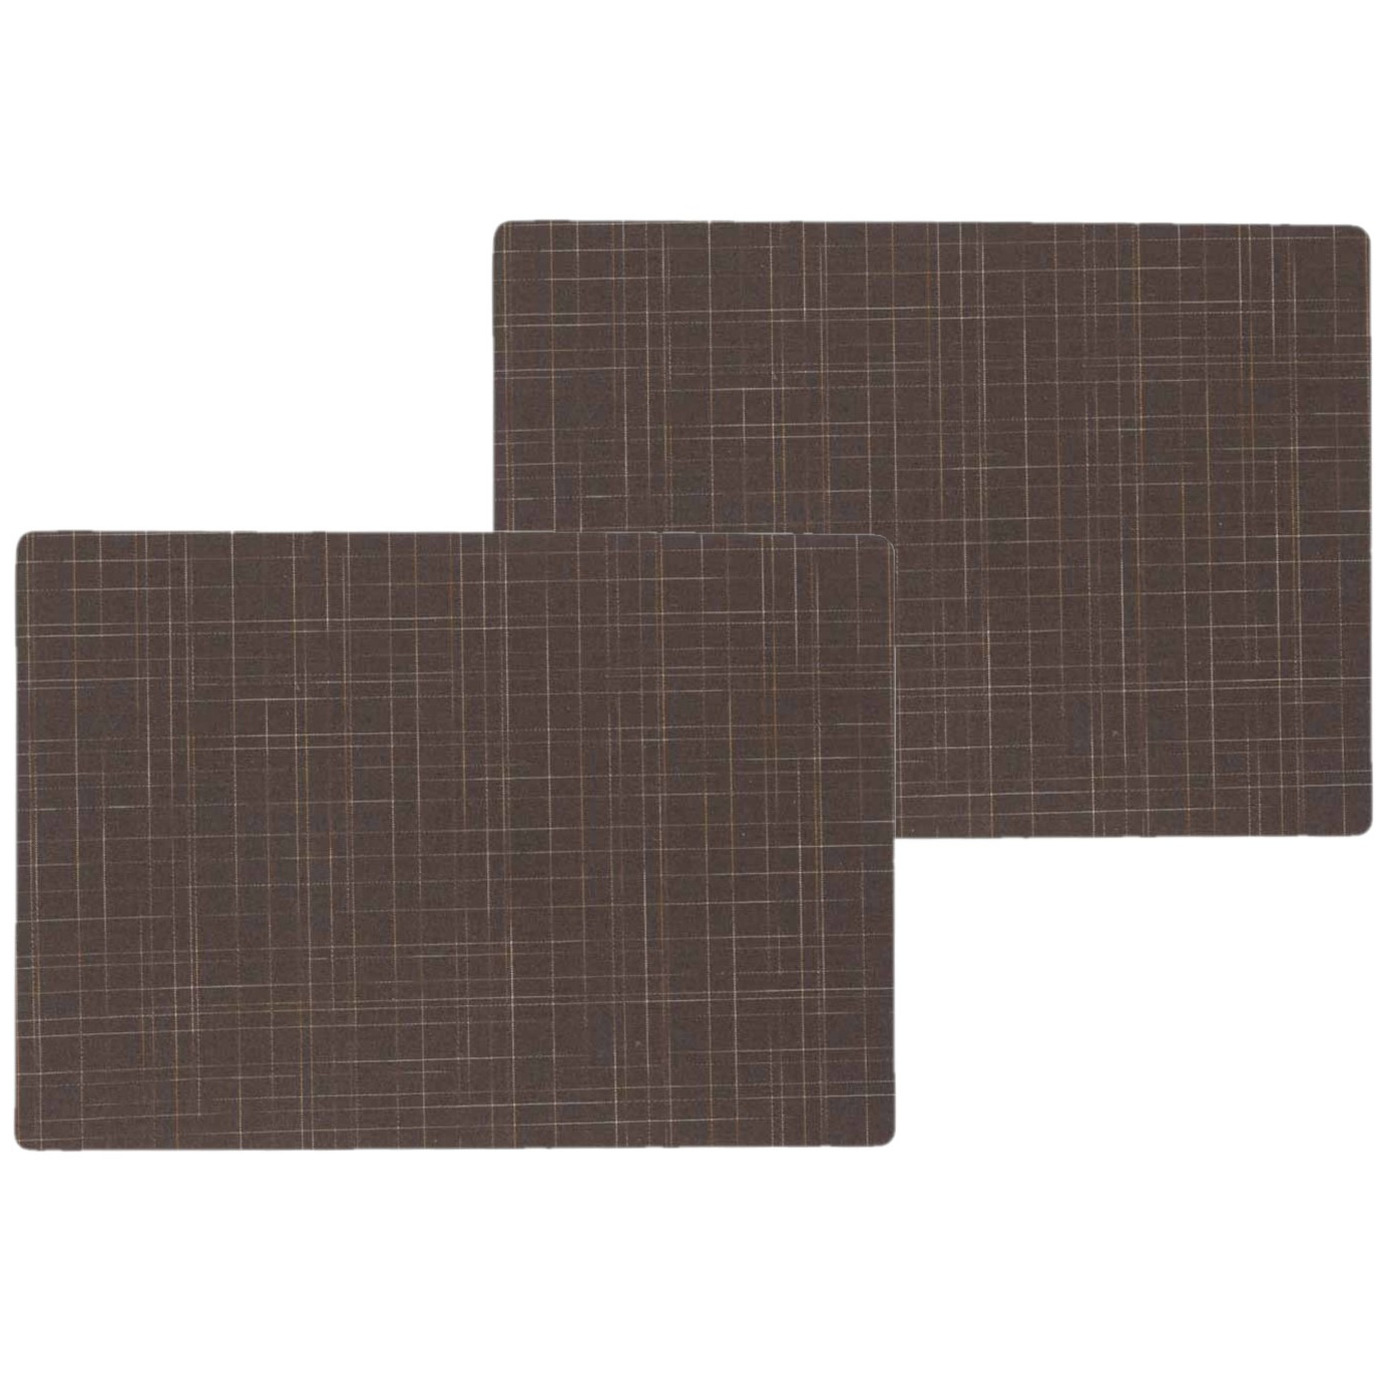 Wicotex 8x stuks stevige luxe Tafel placemats Liso bruin 30 x 43 cm -